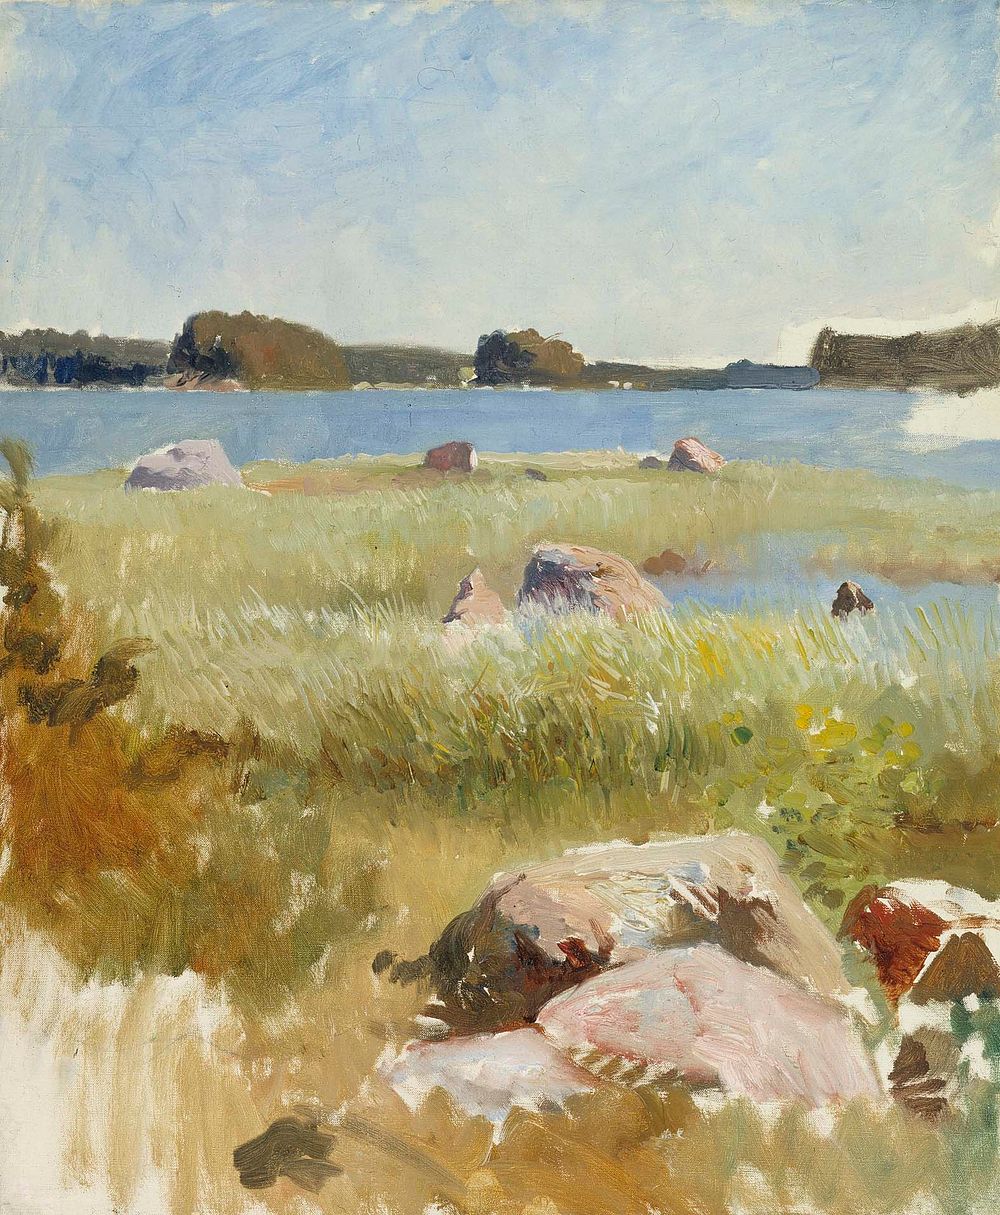 Spring landscape (1885 - 1889) oil painting by Albert Edelfelt.